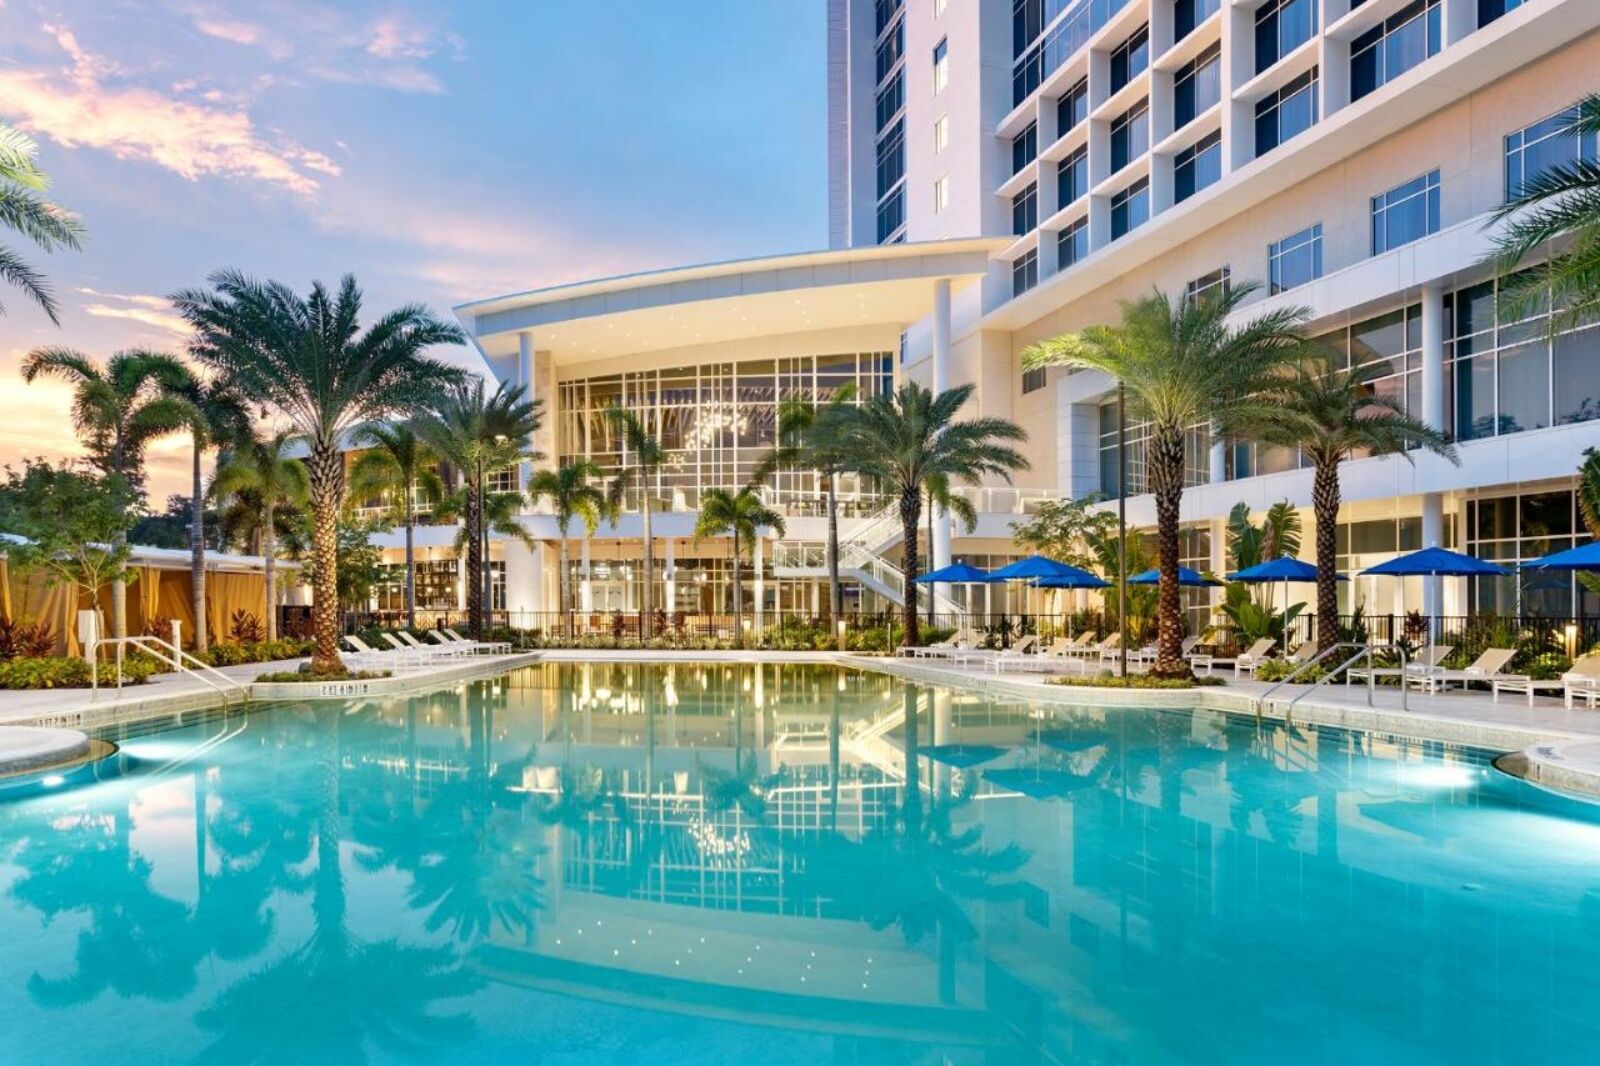 Swimming pool at JW Marriott Orlando Bonnet Creek Resort & Spa one of the best Orlando resorts 